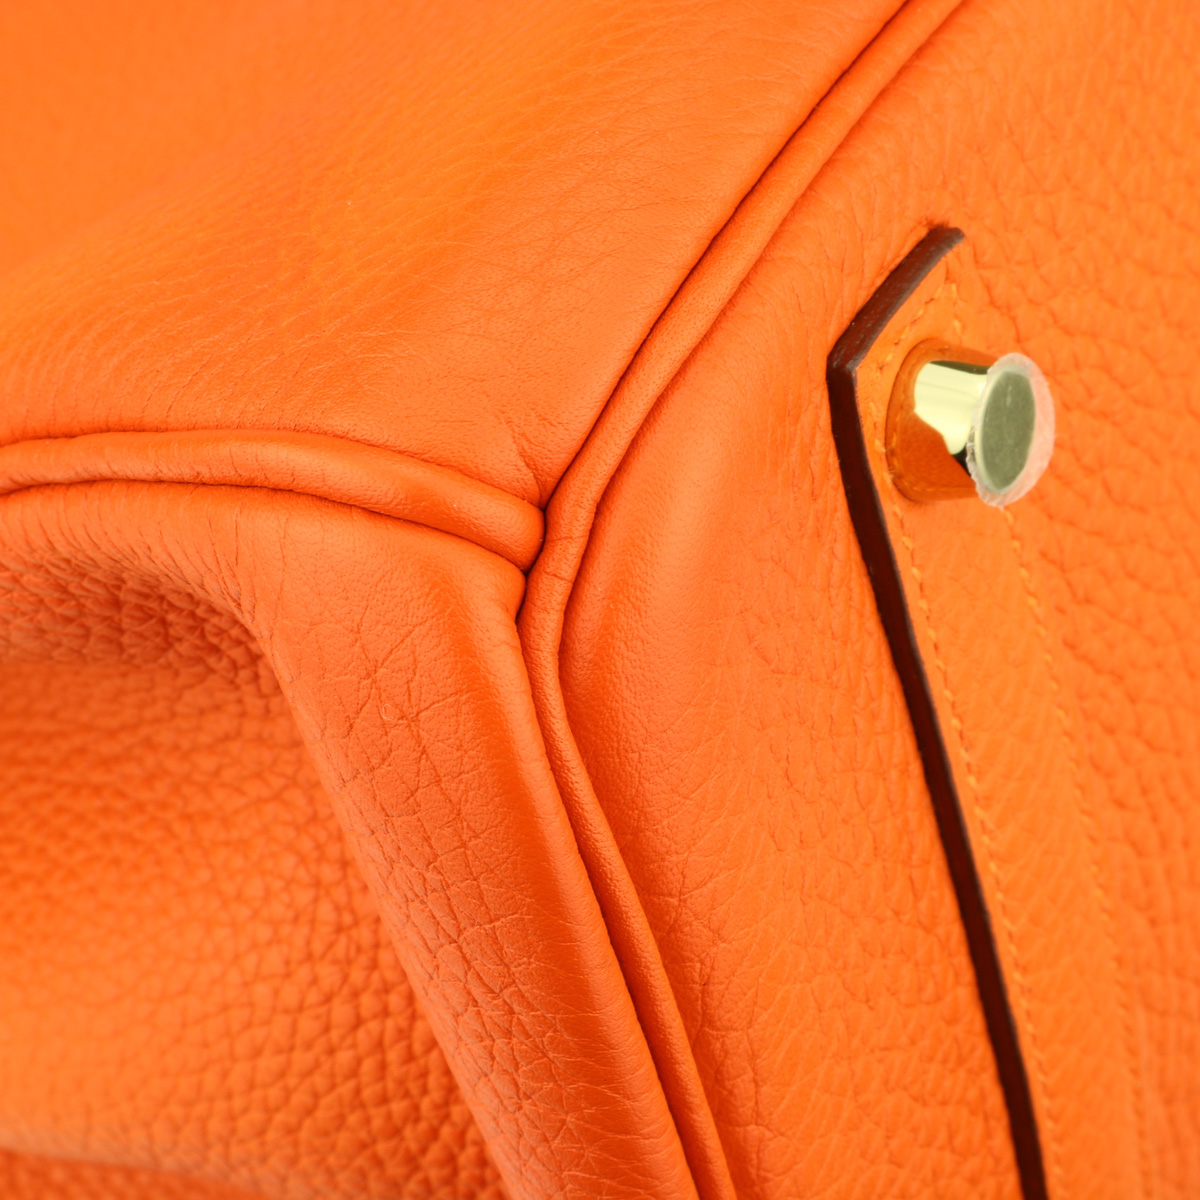 vionarosalina carried #Hermes birkin 30 orange togo leather with